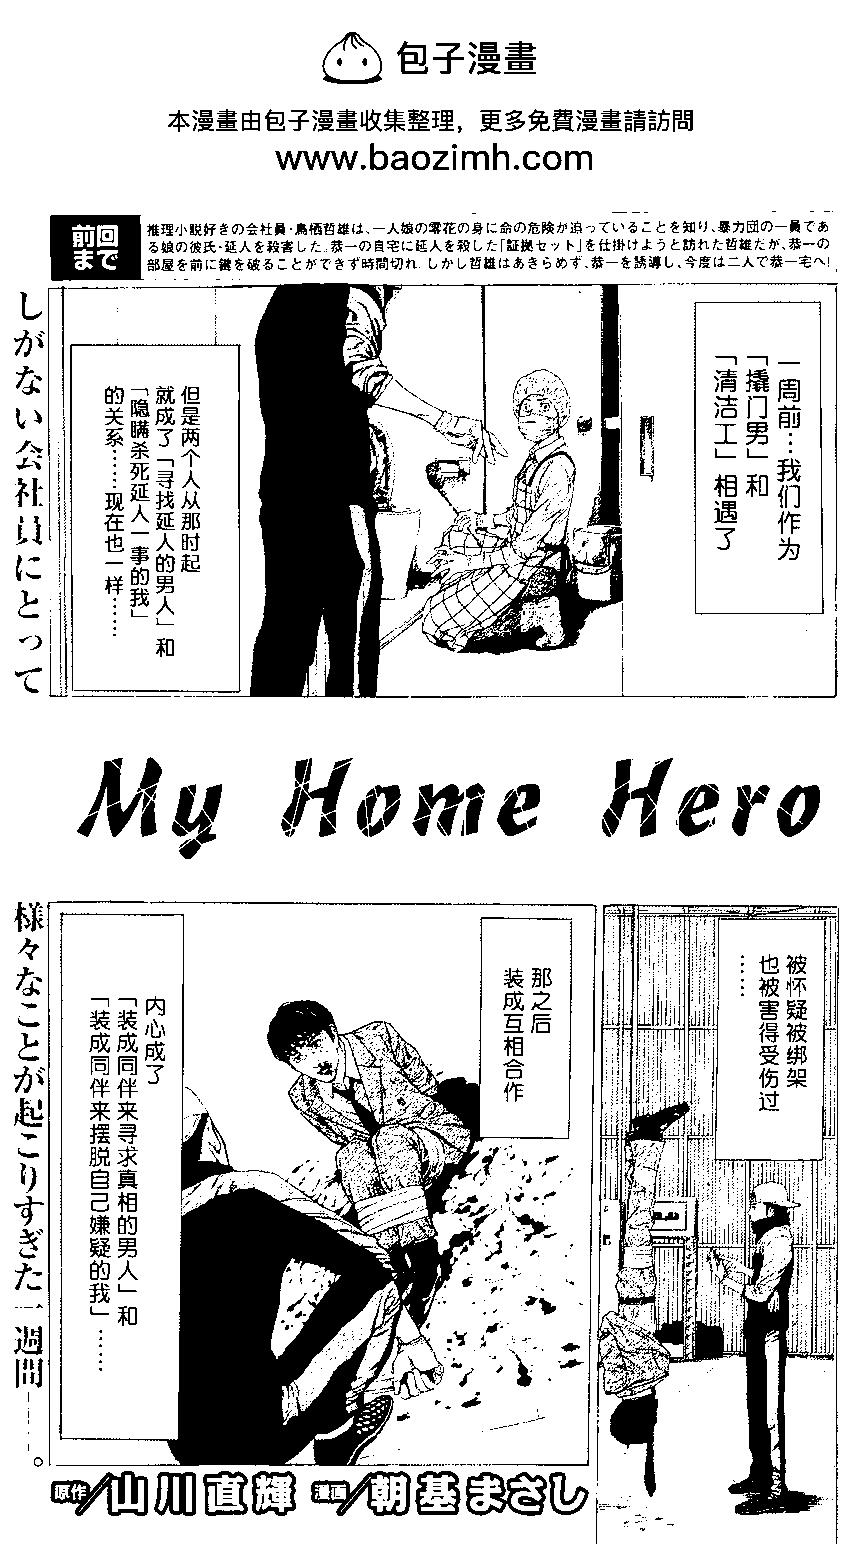 MY HOME HERO - 第33回 - 2